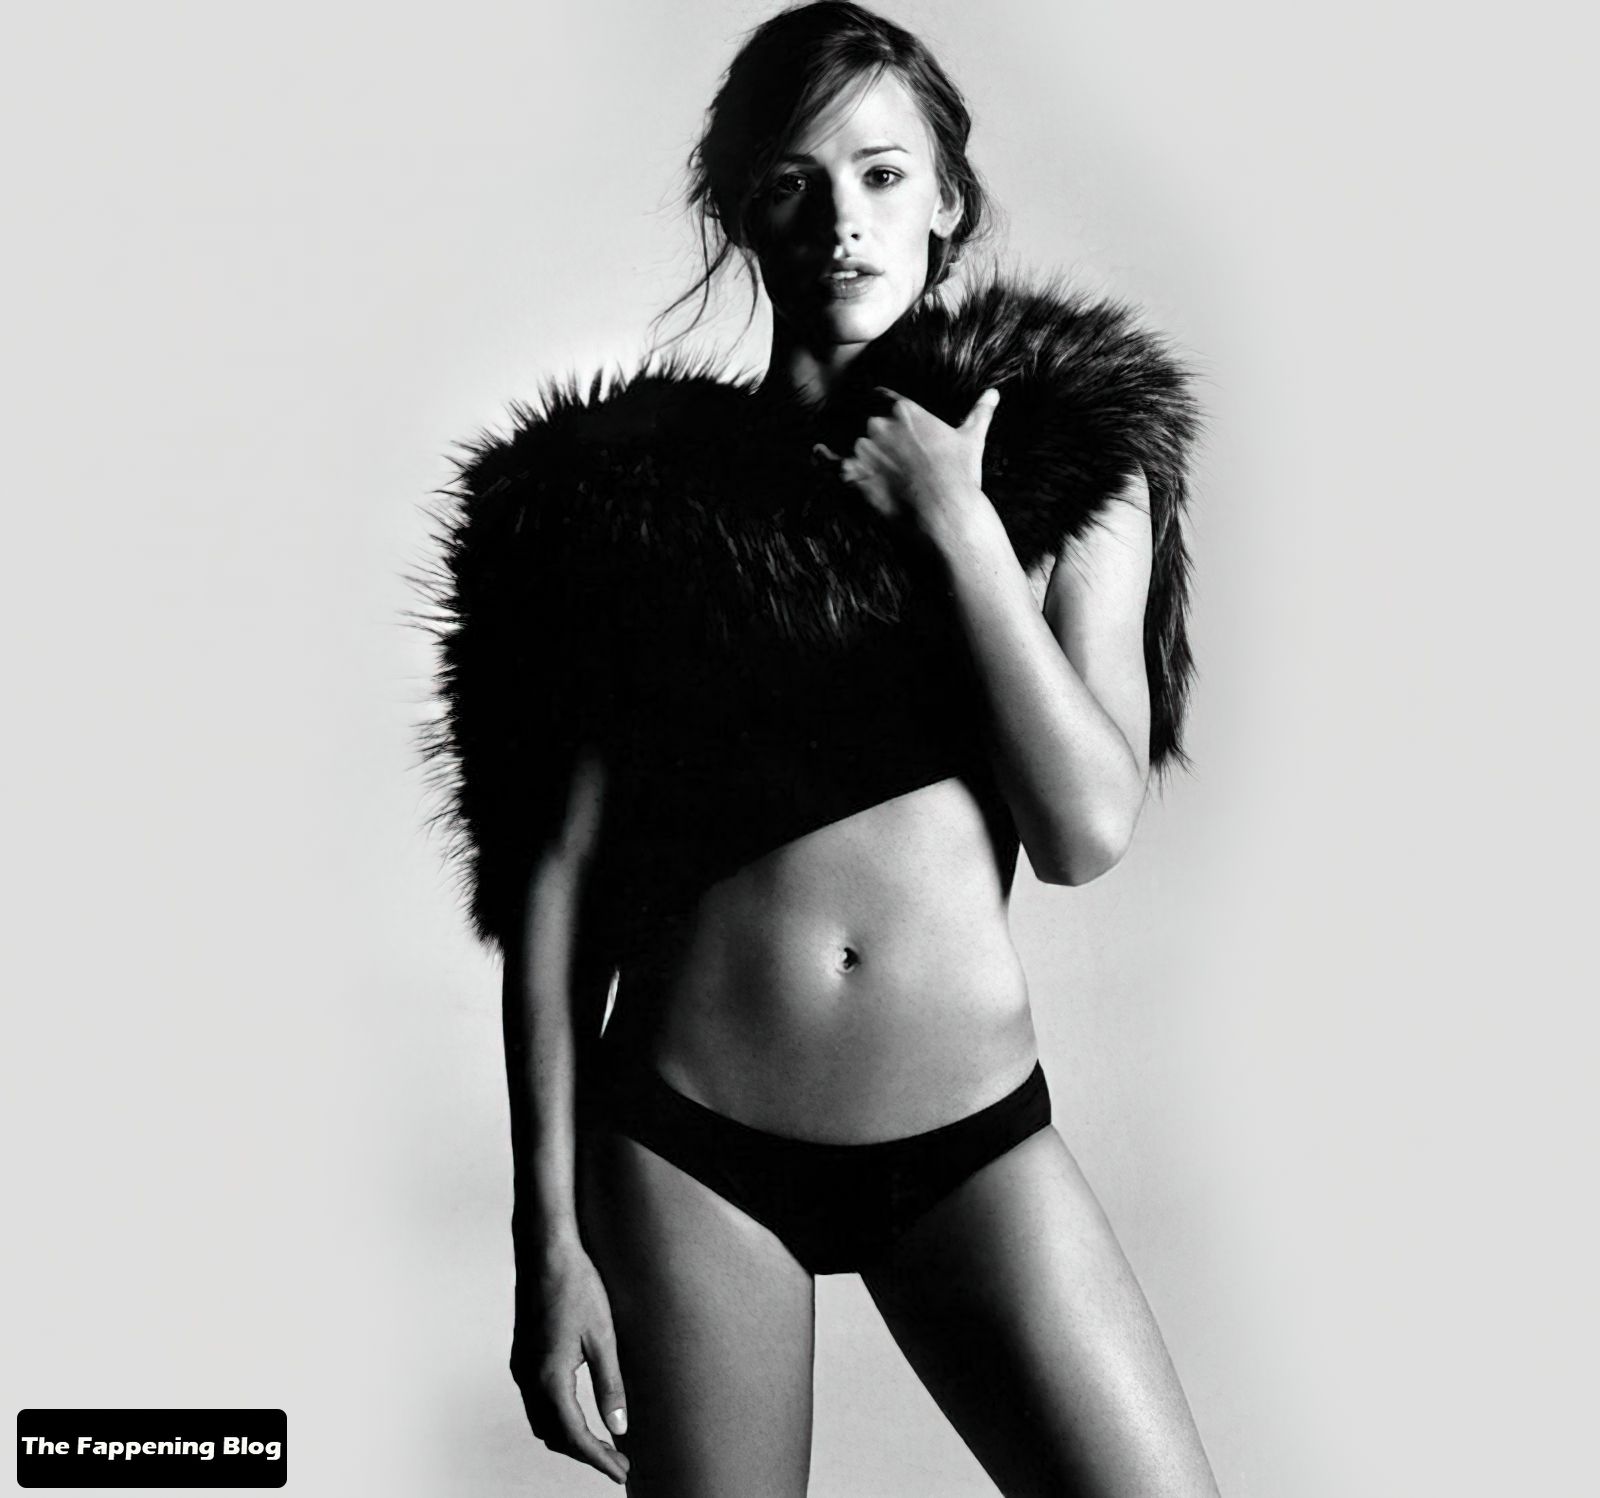 Jennifer-Garner-Nude-Sexy-The-Fappening-Blog-10.jpg